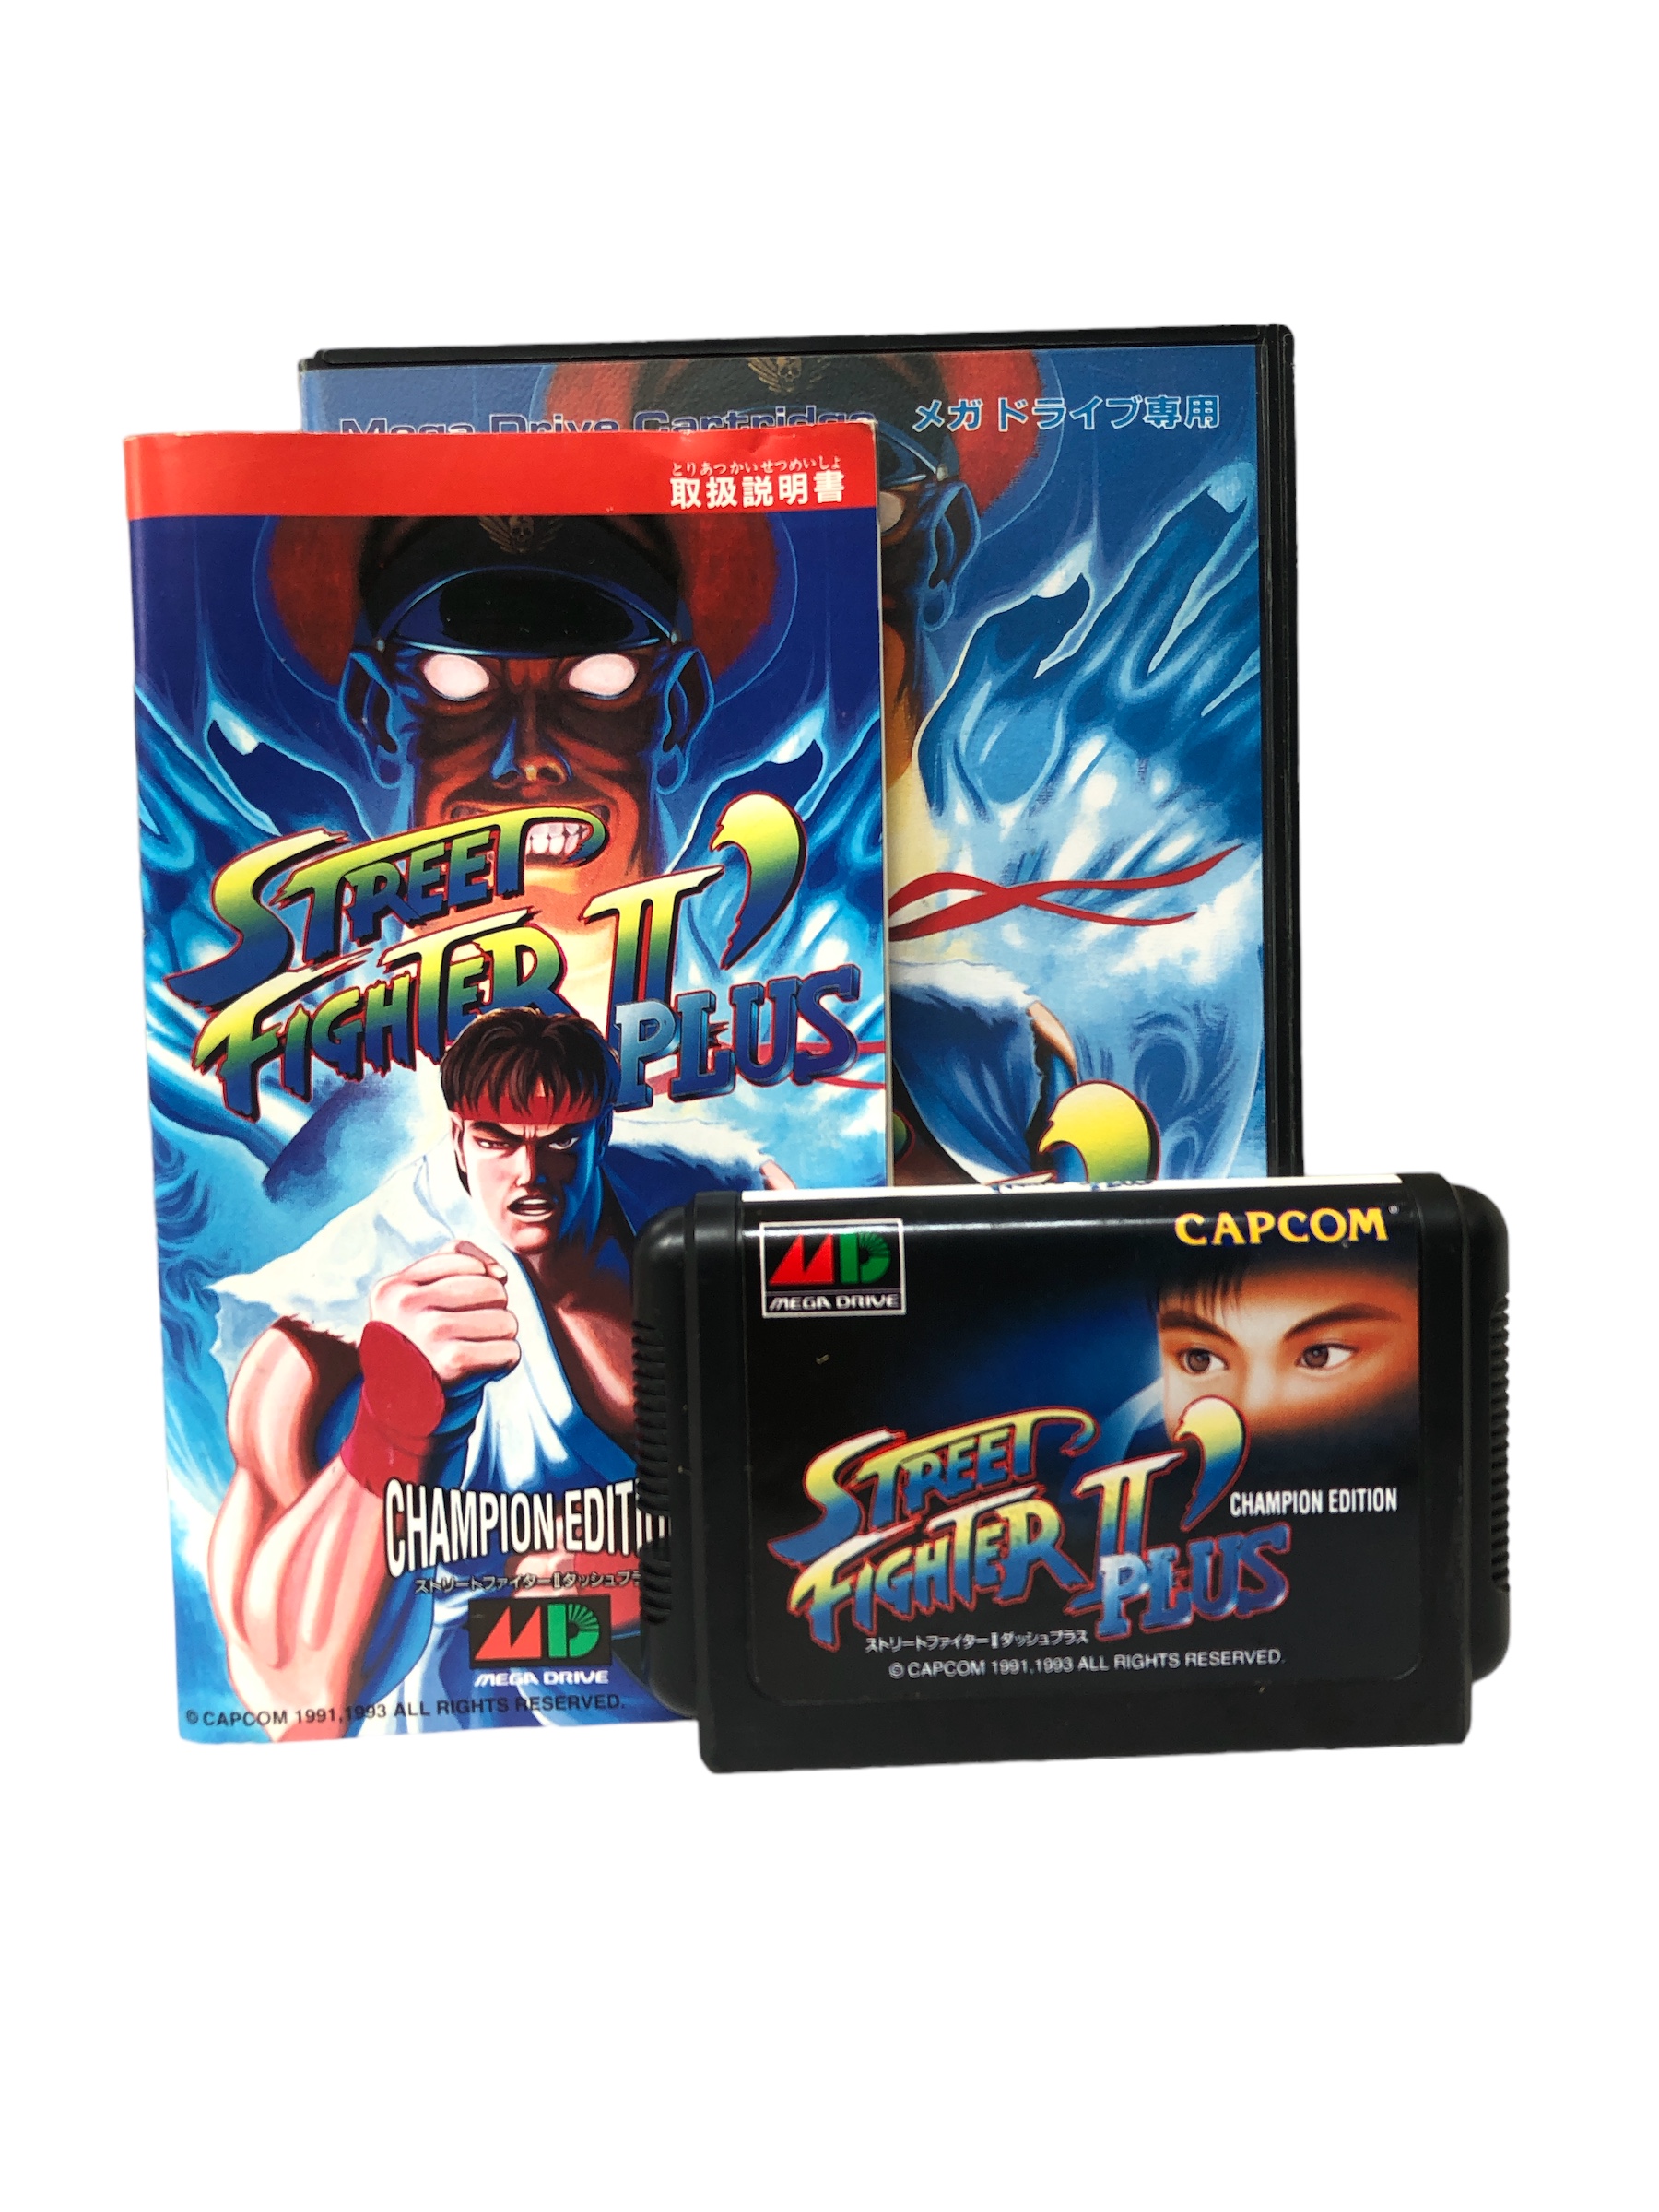 Street Fighter II Champion Edition em Jogos na Internet